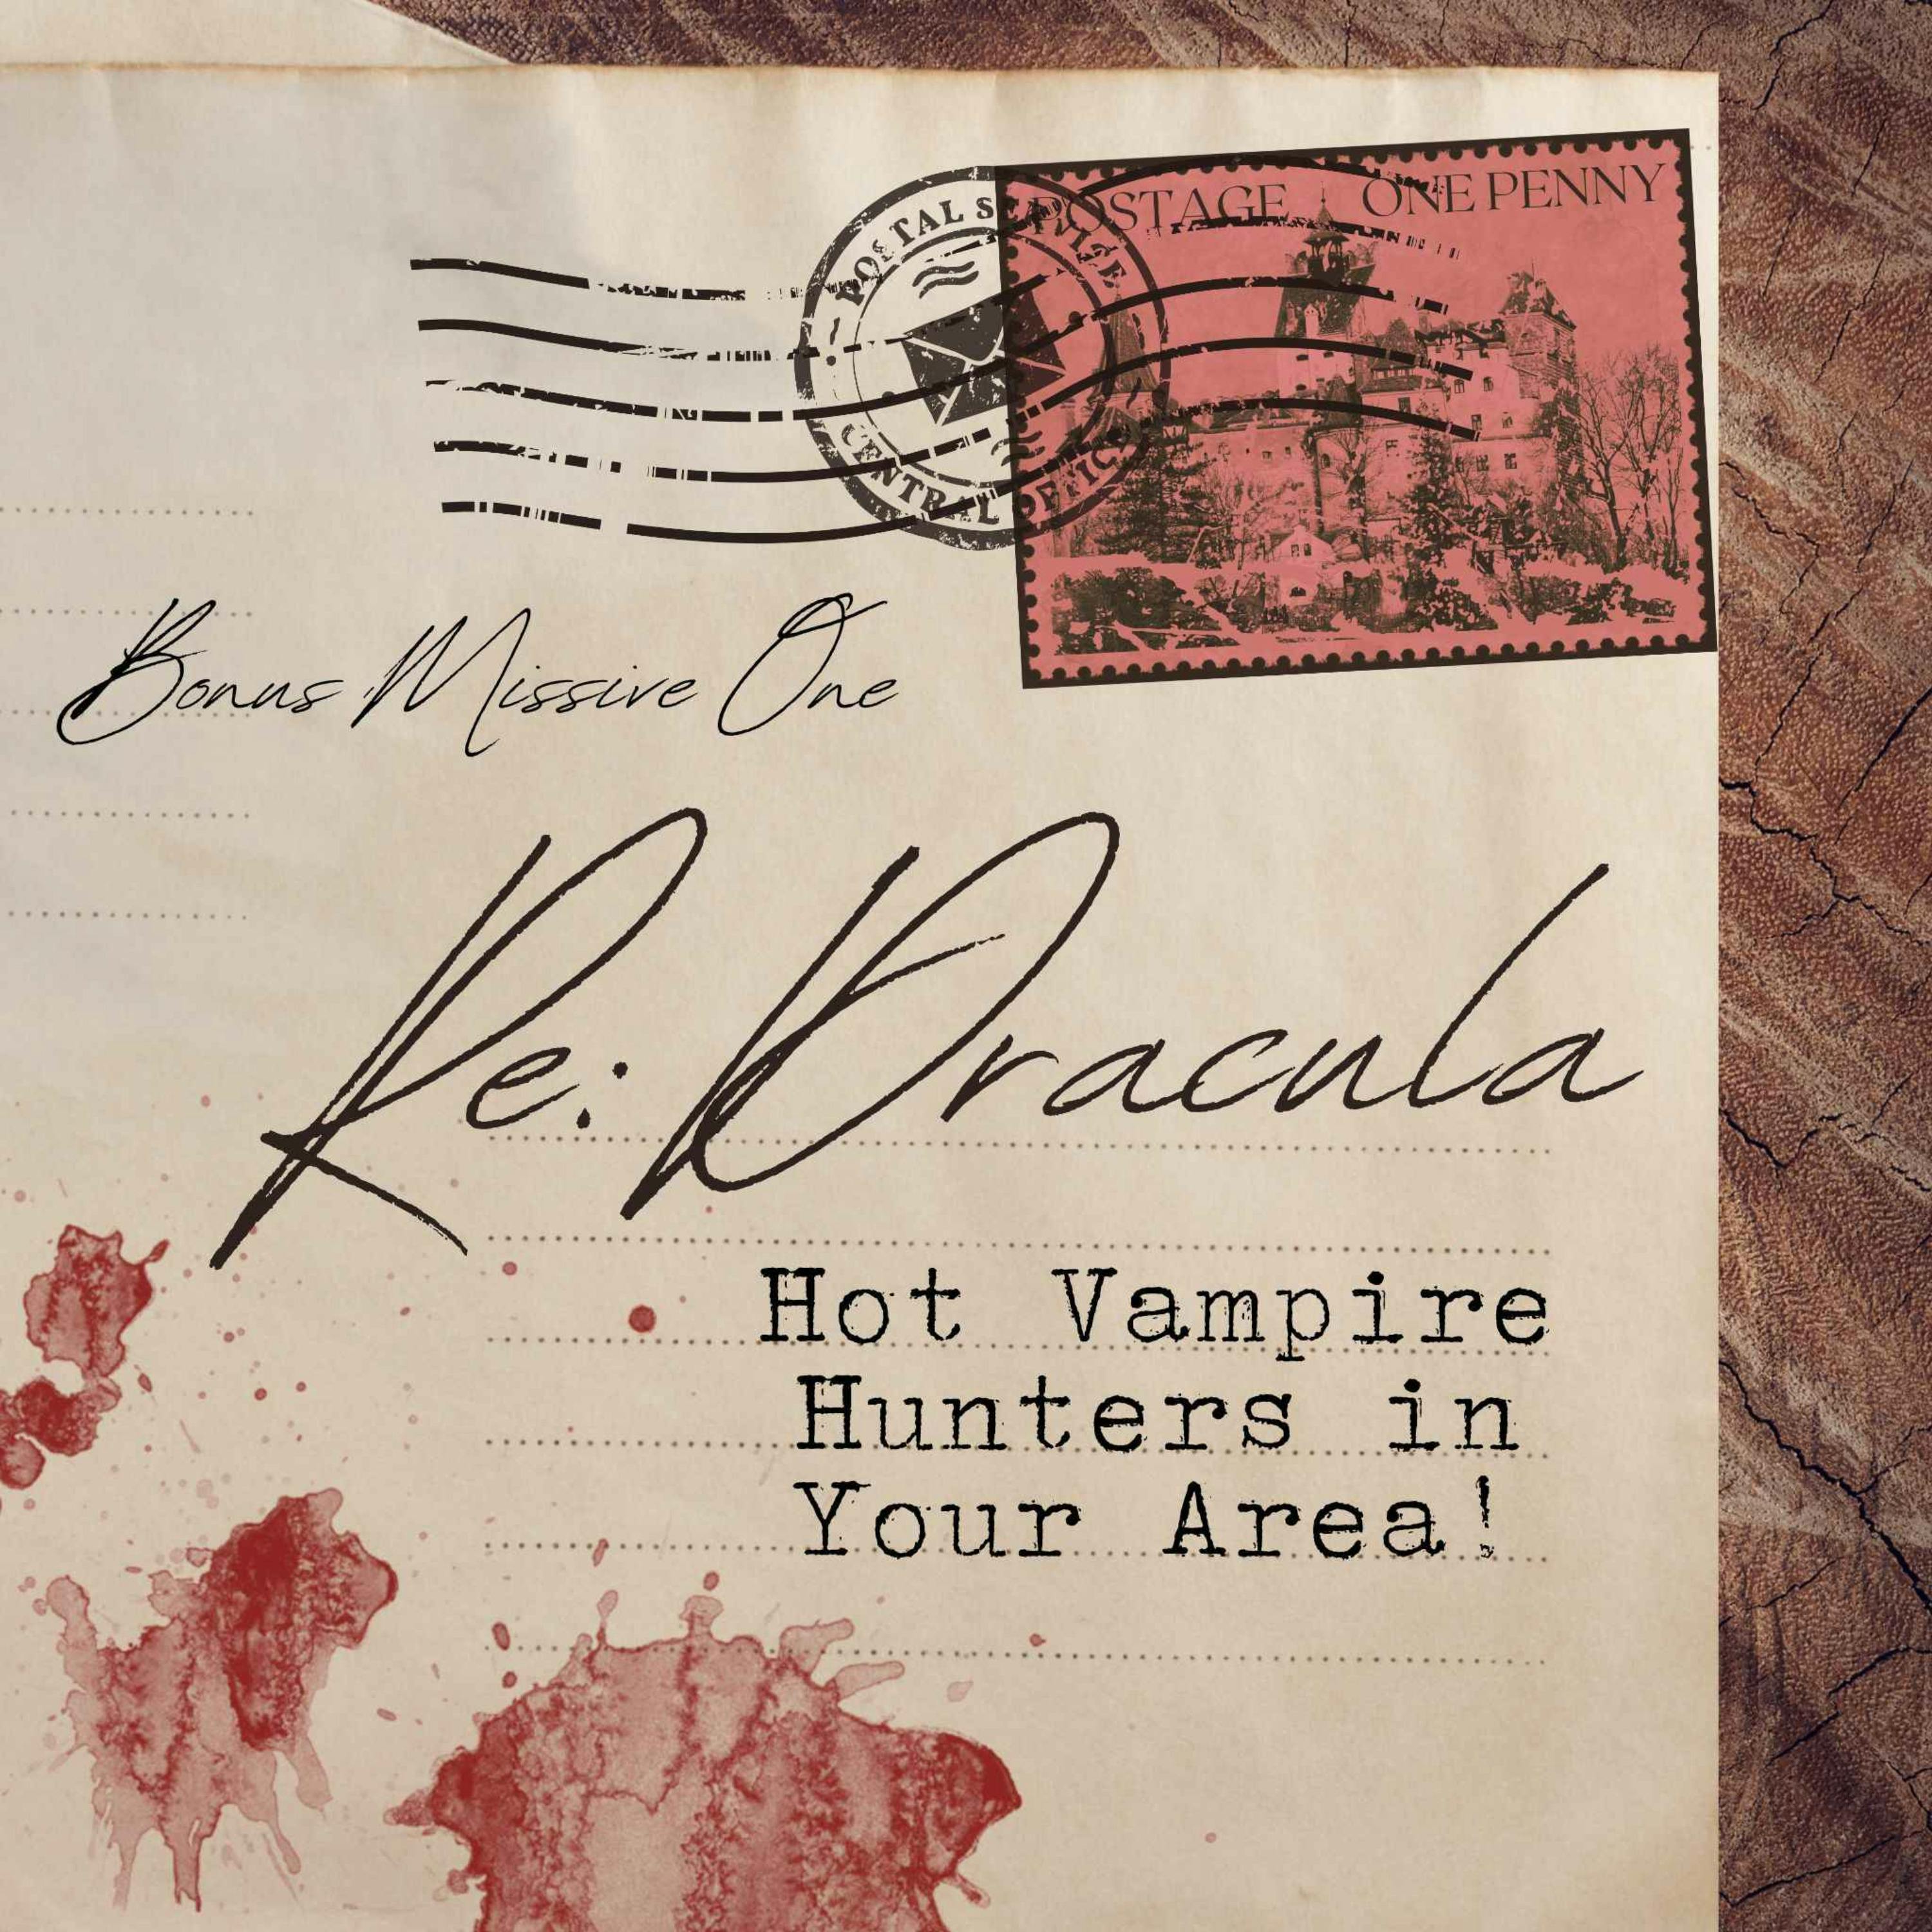 Bonus 1: Hot Vampire Hunters in Your Area!